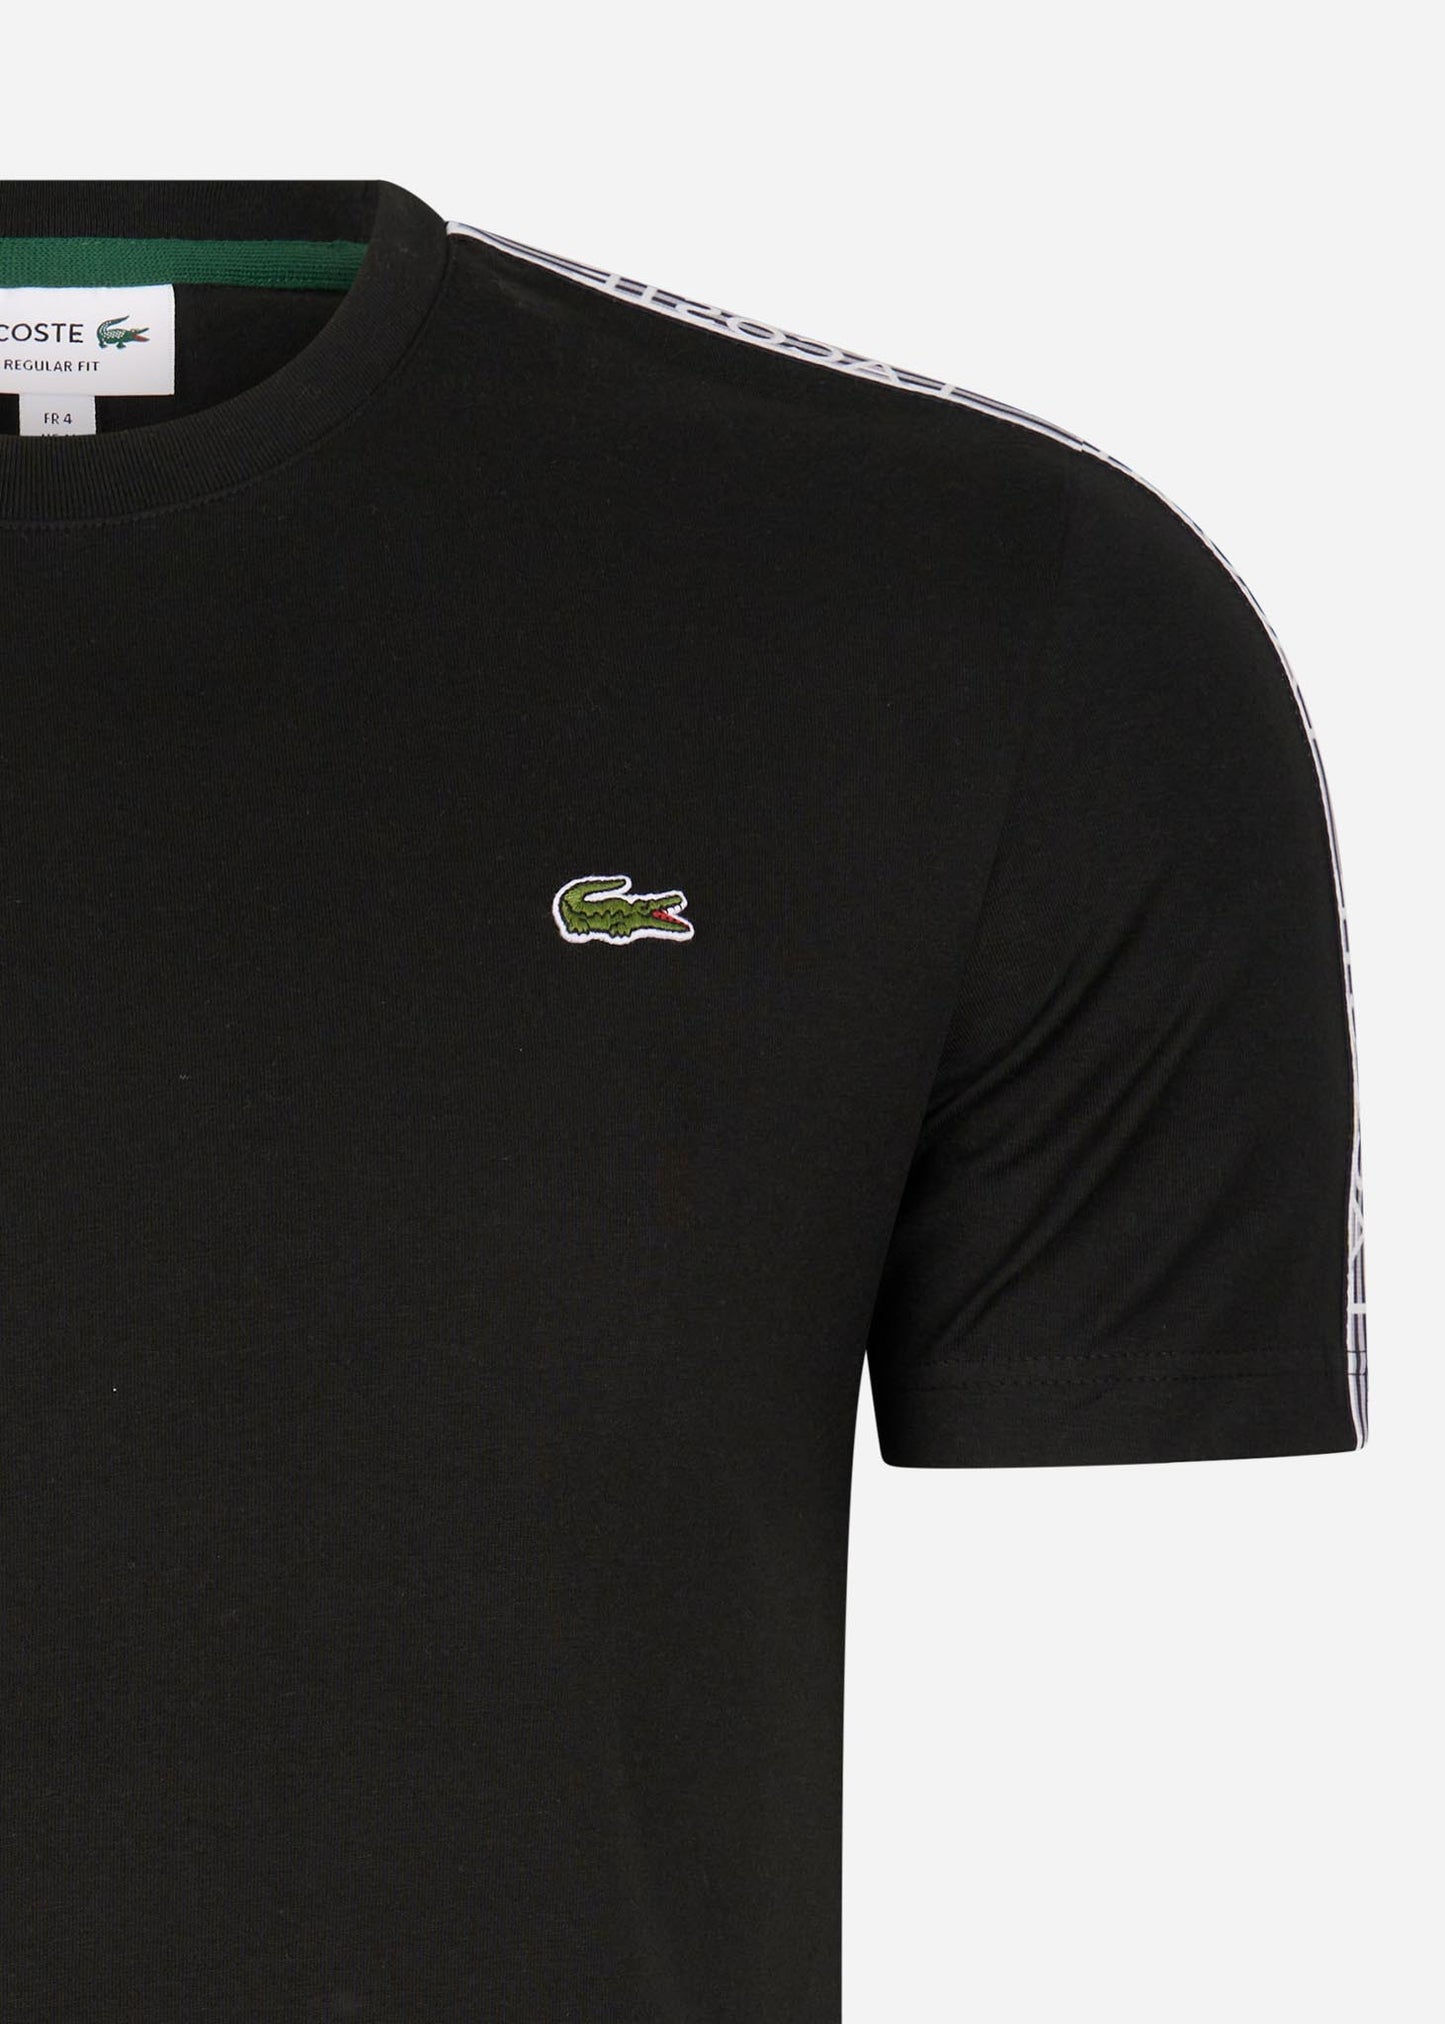 Lacoste T-shirts  Contrast stripe t-shirt - black 